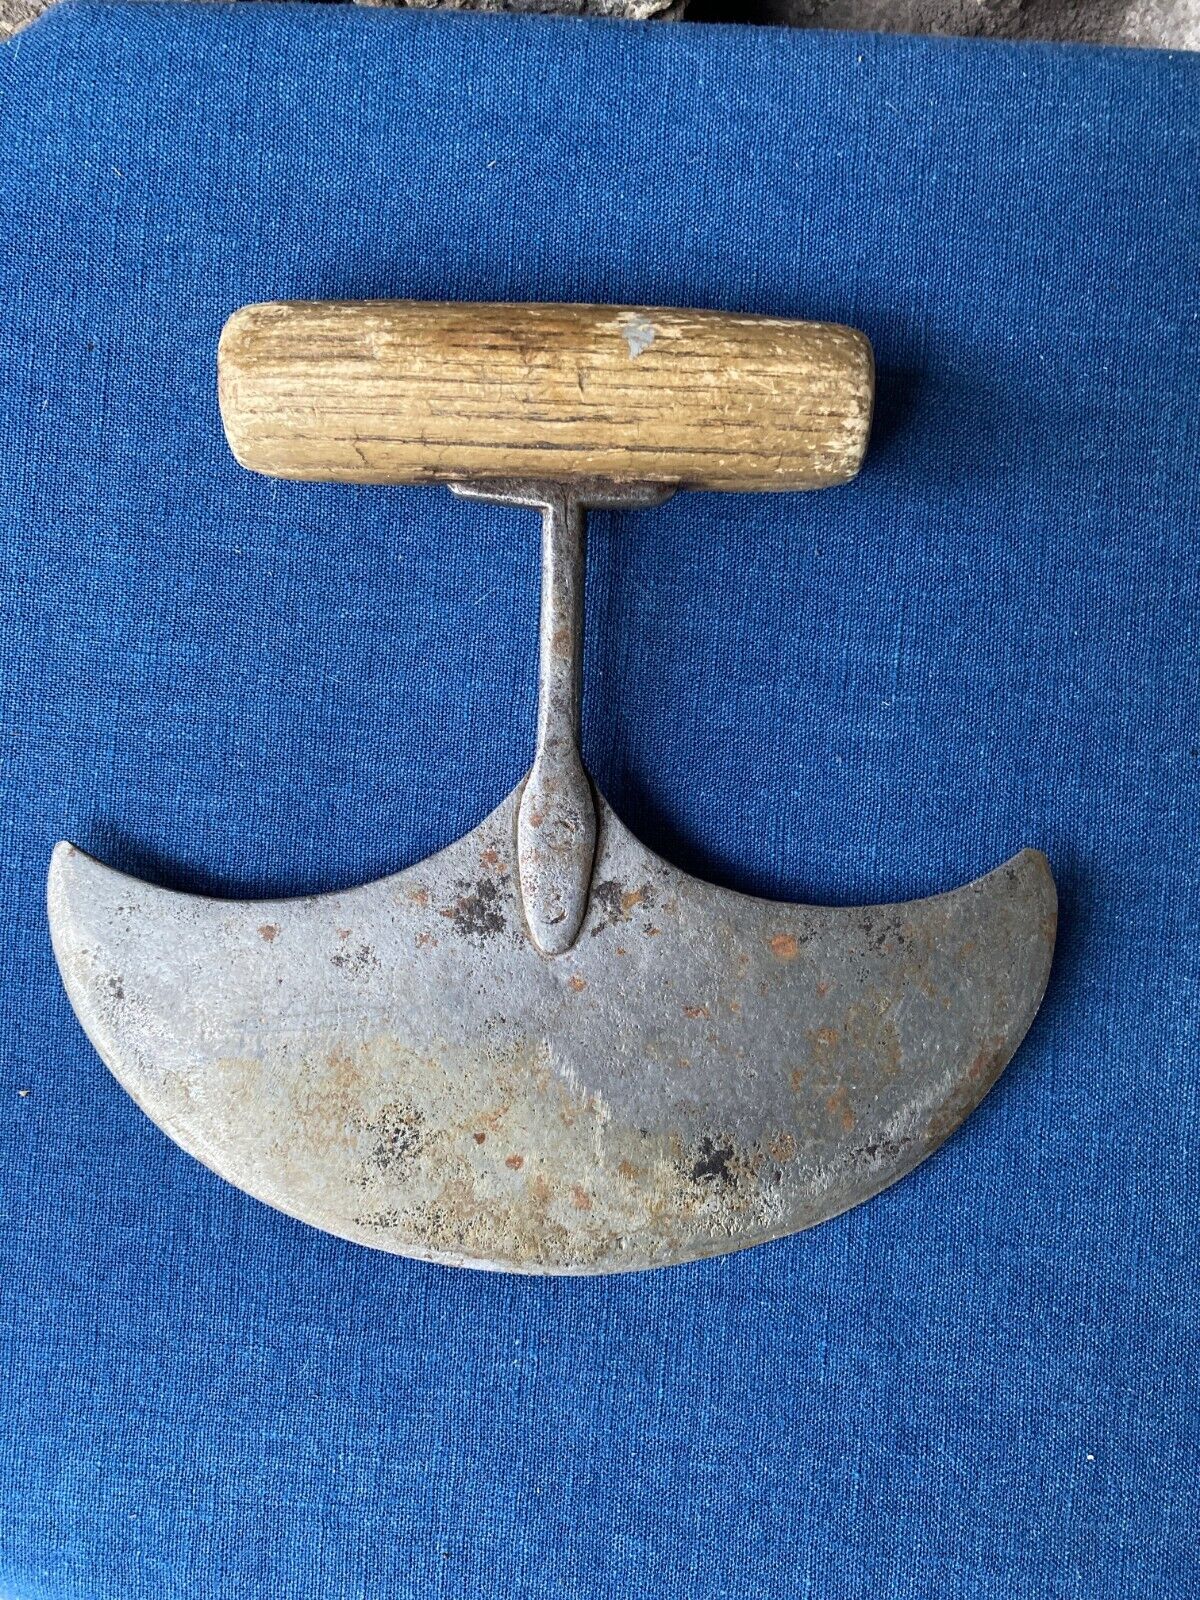 Antique Vintage Heavy Steel HIDE SCRAPER Tool With Wood Handle